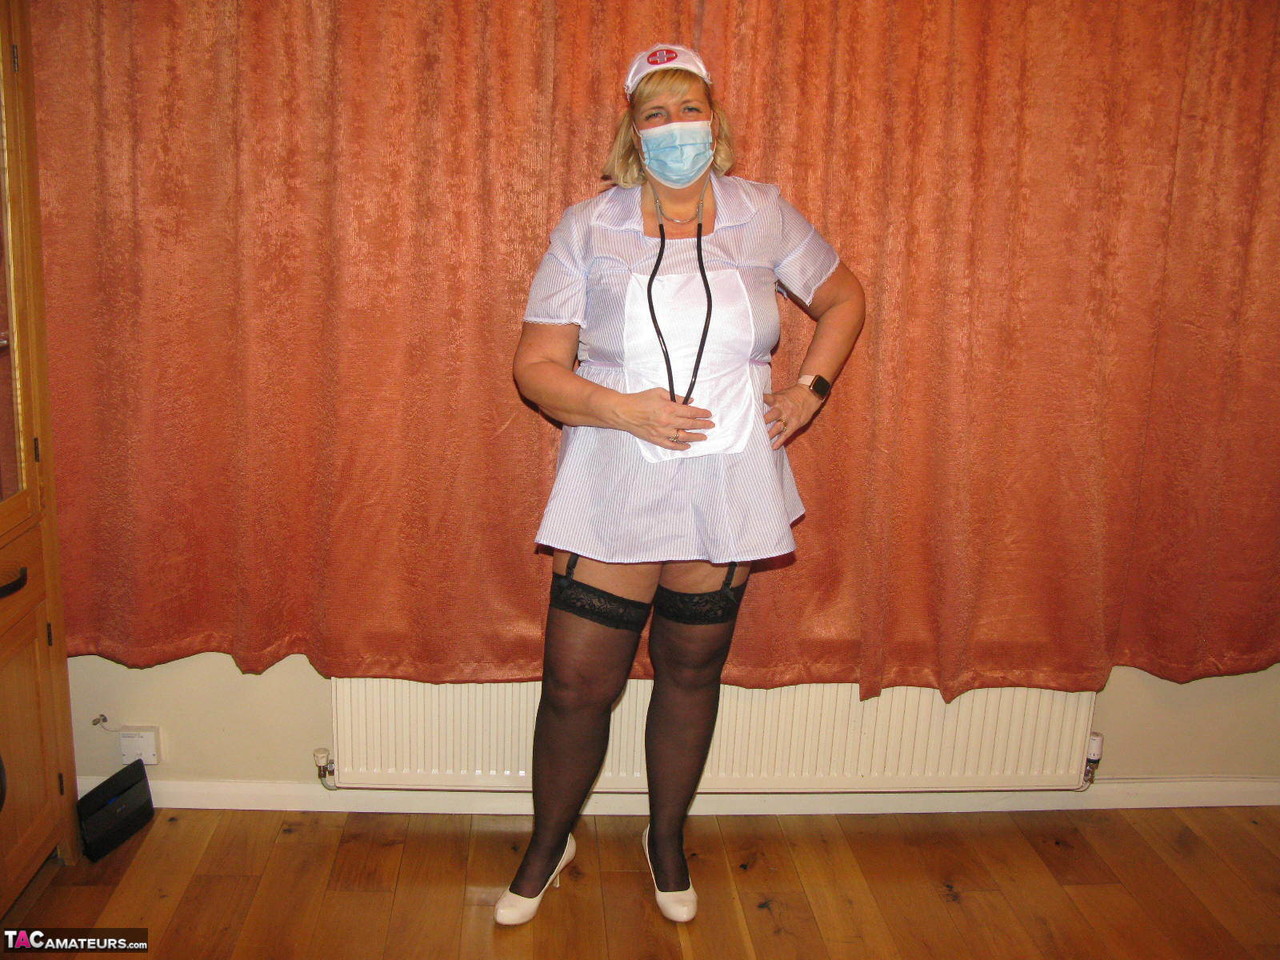 Fat nurse Chrissy Uk removes a surgical mask and uniform to model lingerie 色情照片 #424682137 | TAC Amateurs Pics, Chrissy Uk, Mature, 手机色情